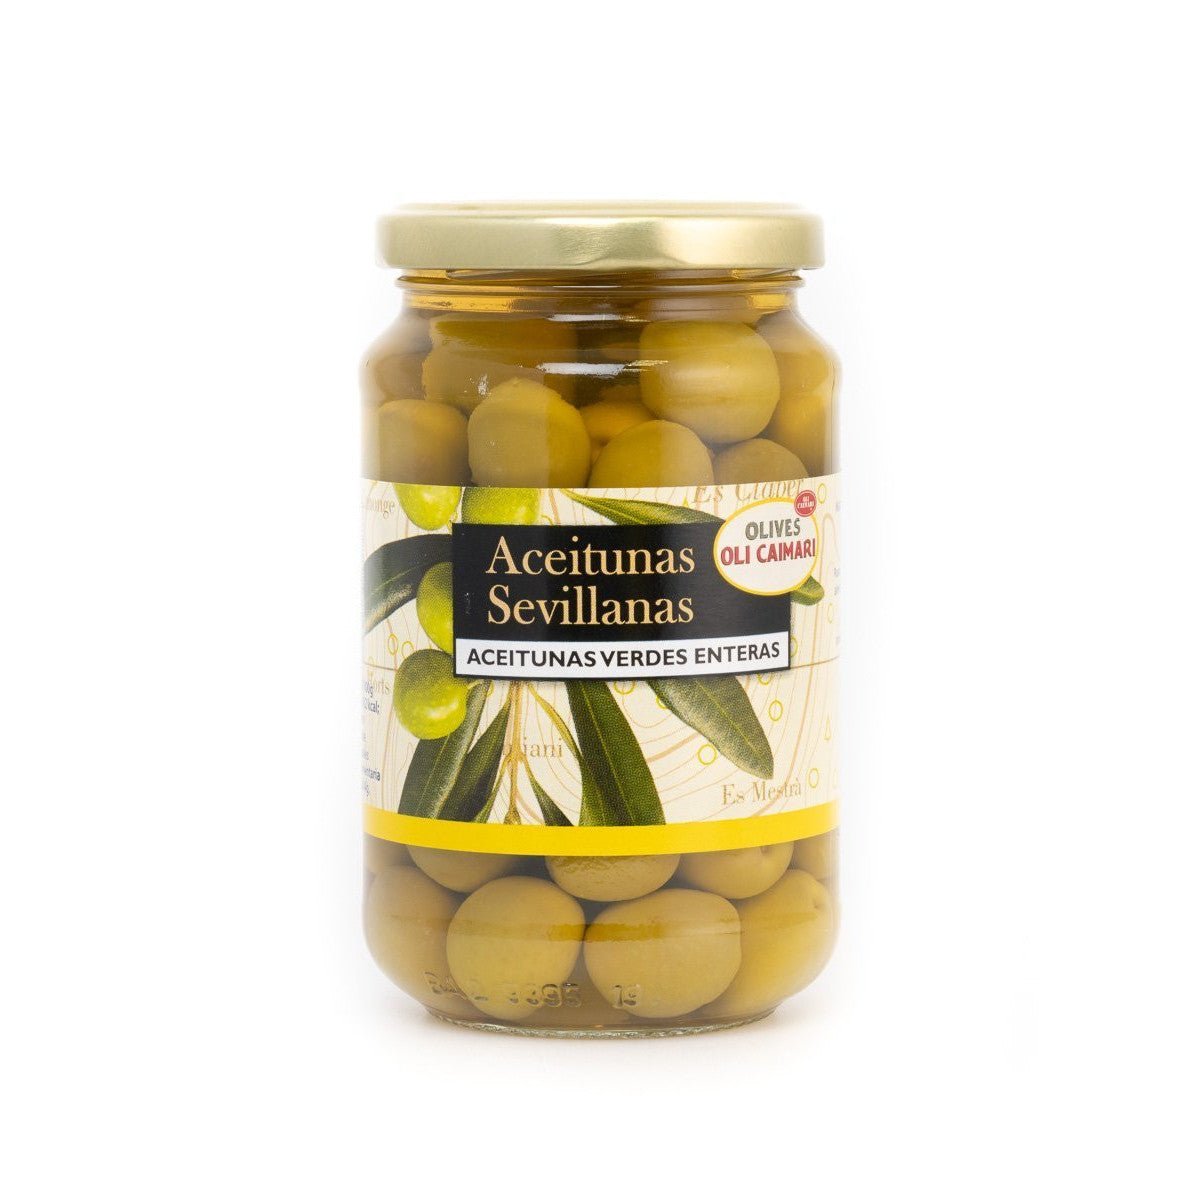 Grüne Oliven aus Sevilla (190g) - Gourmet Markt - Olives Oli Caimari